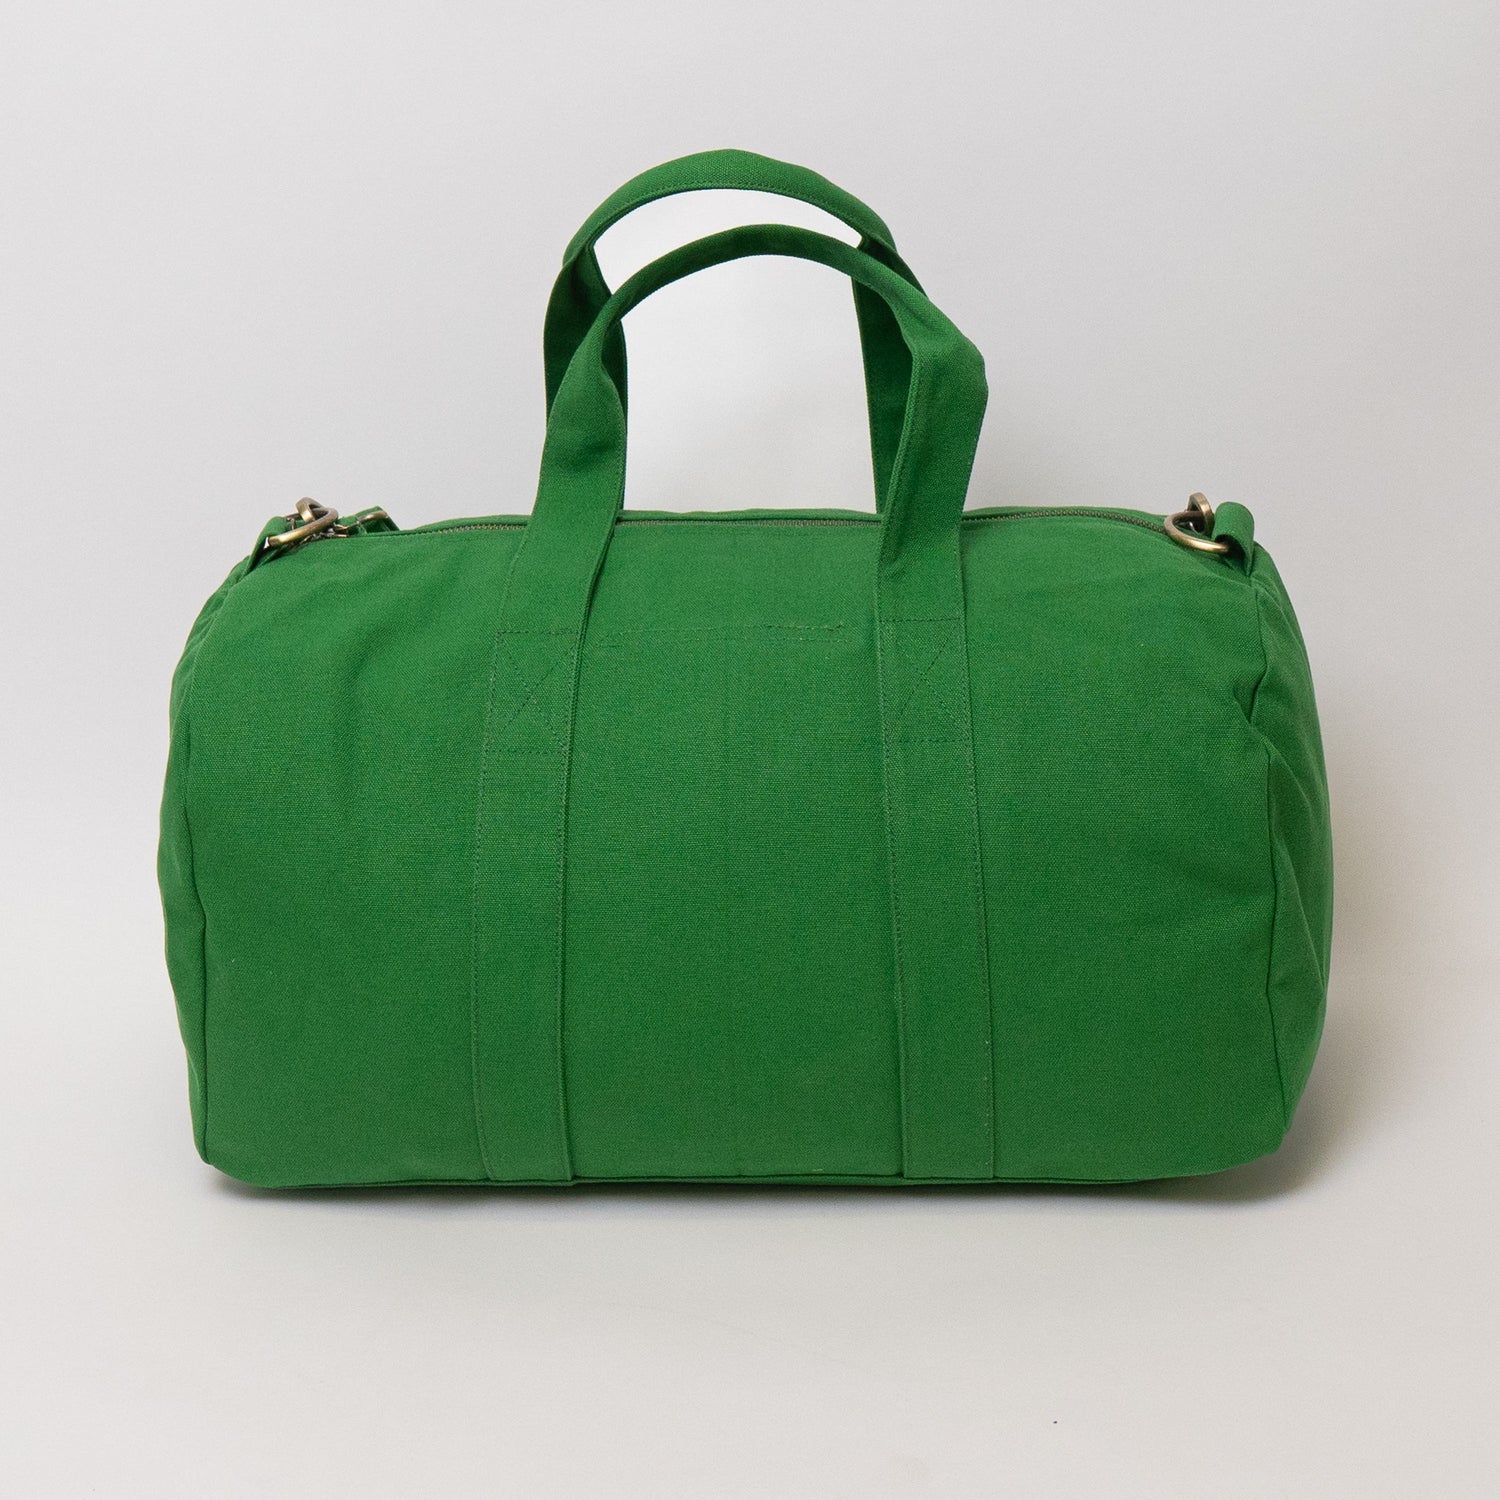 Brand Bags Handbags From Turkey Wholesale Cheap Handbag Stock Mix